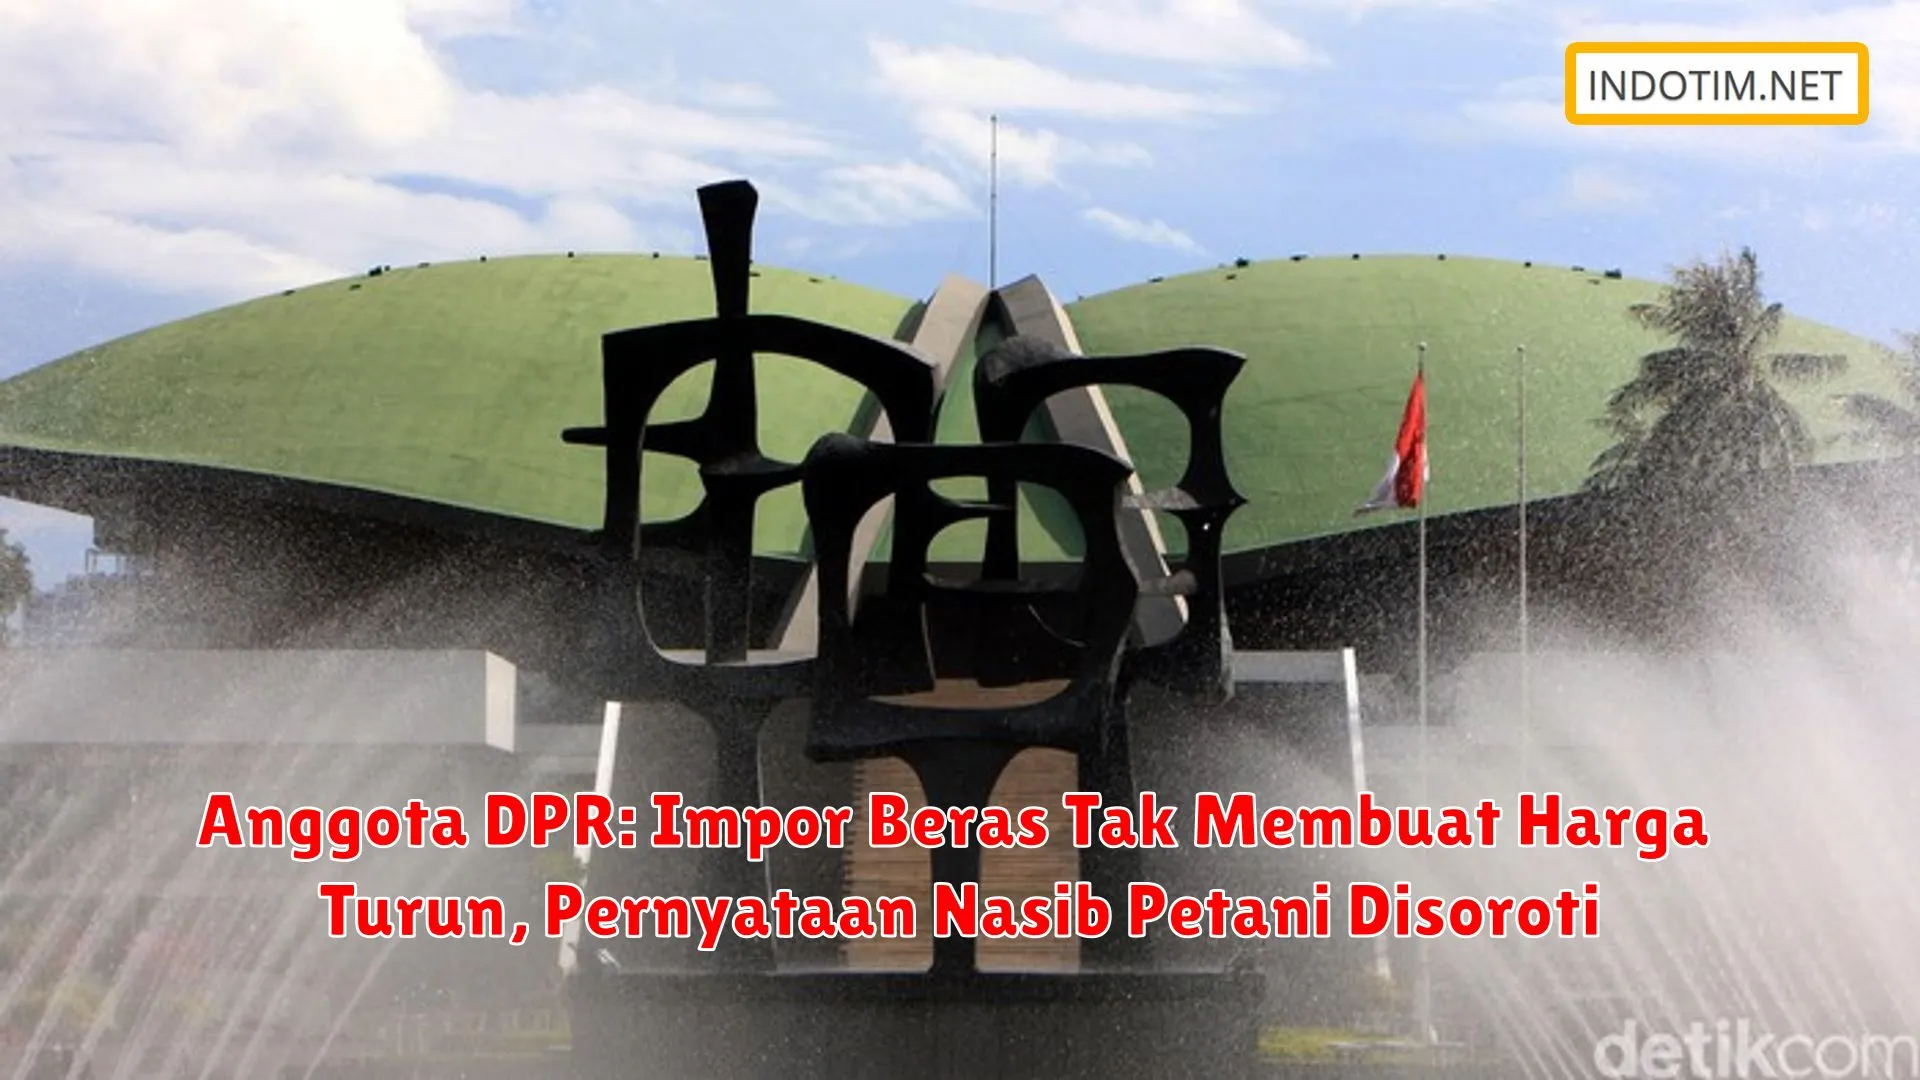 Anggota DPR: Impor Beras Tak Membuat Harga Turun, Pernyataan Nasib Petani Disoroti